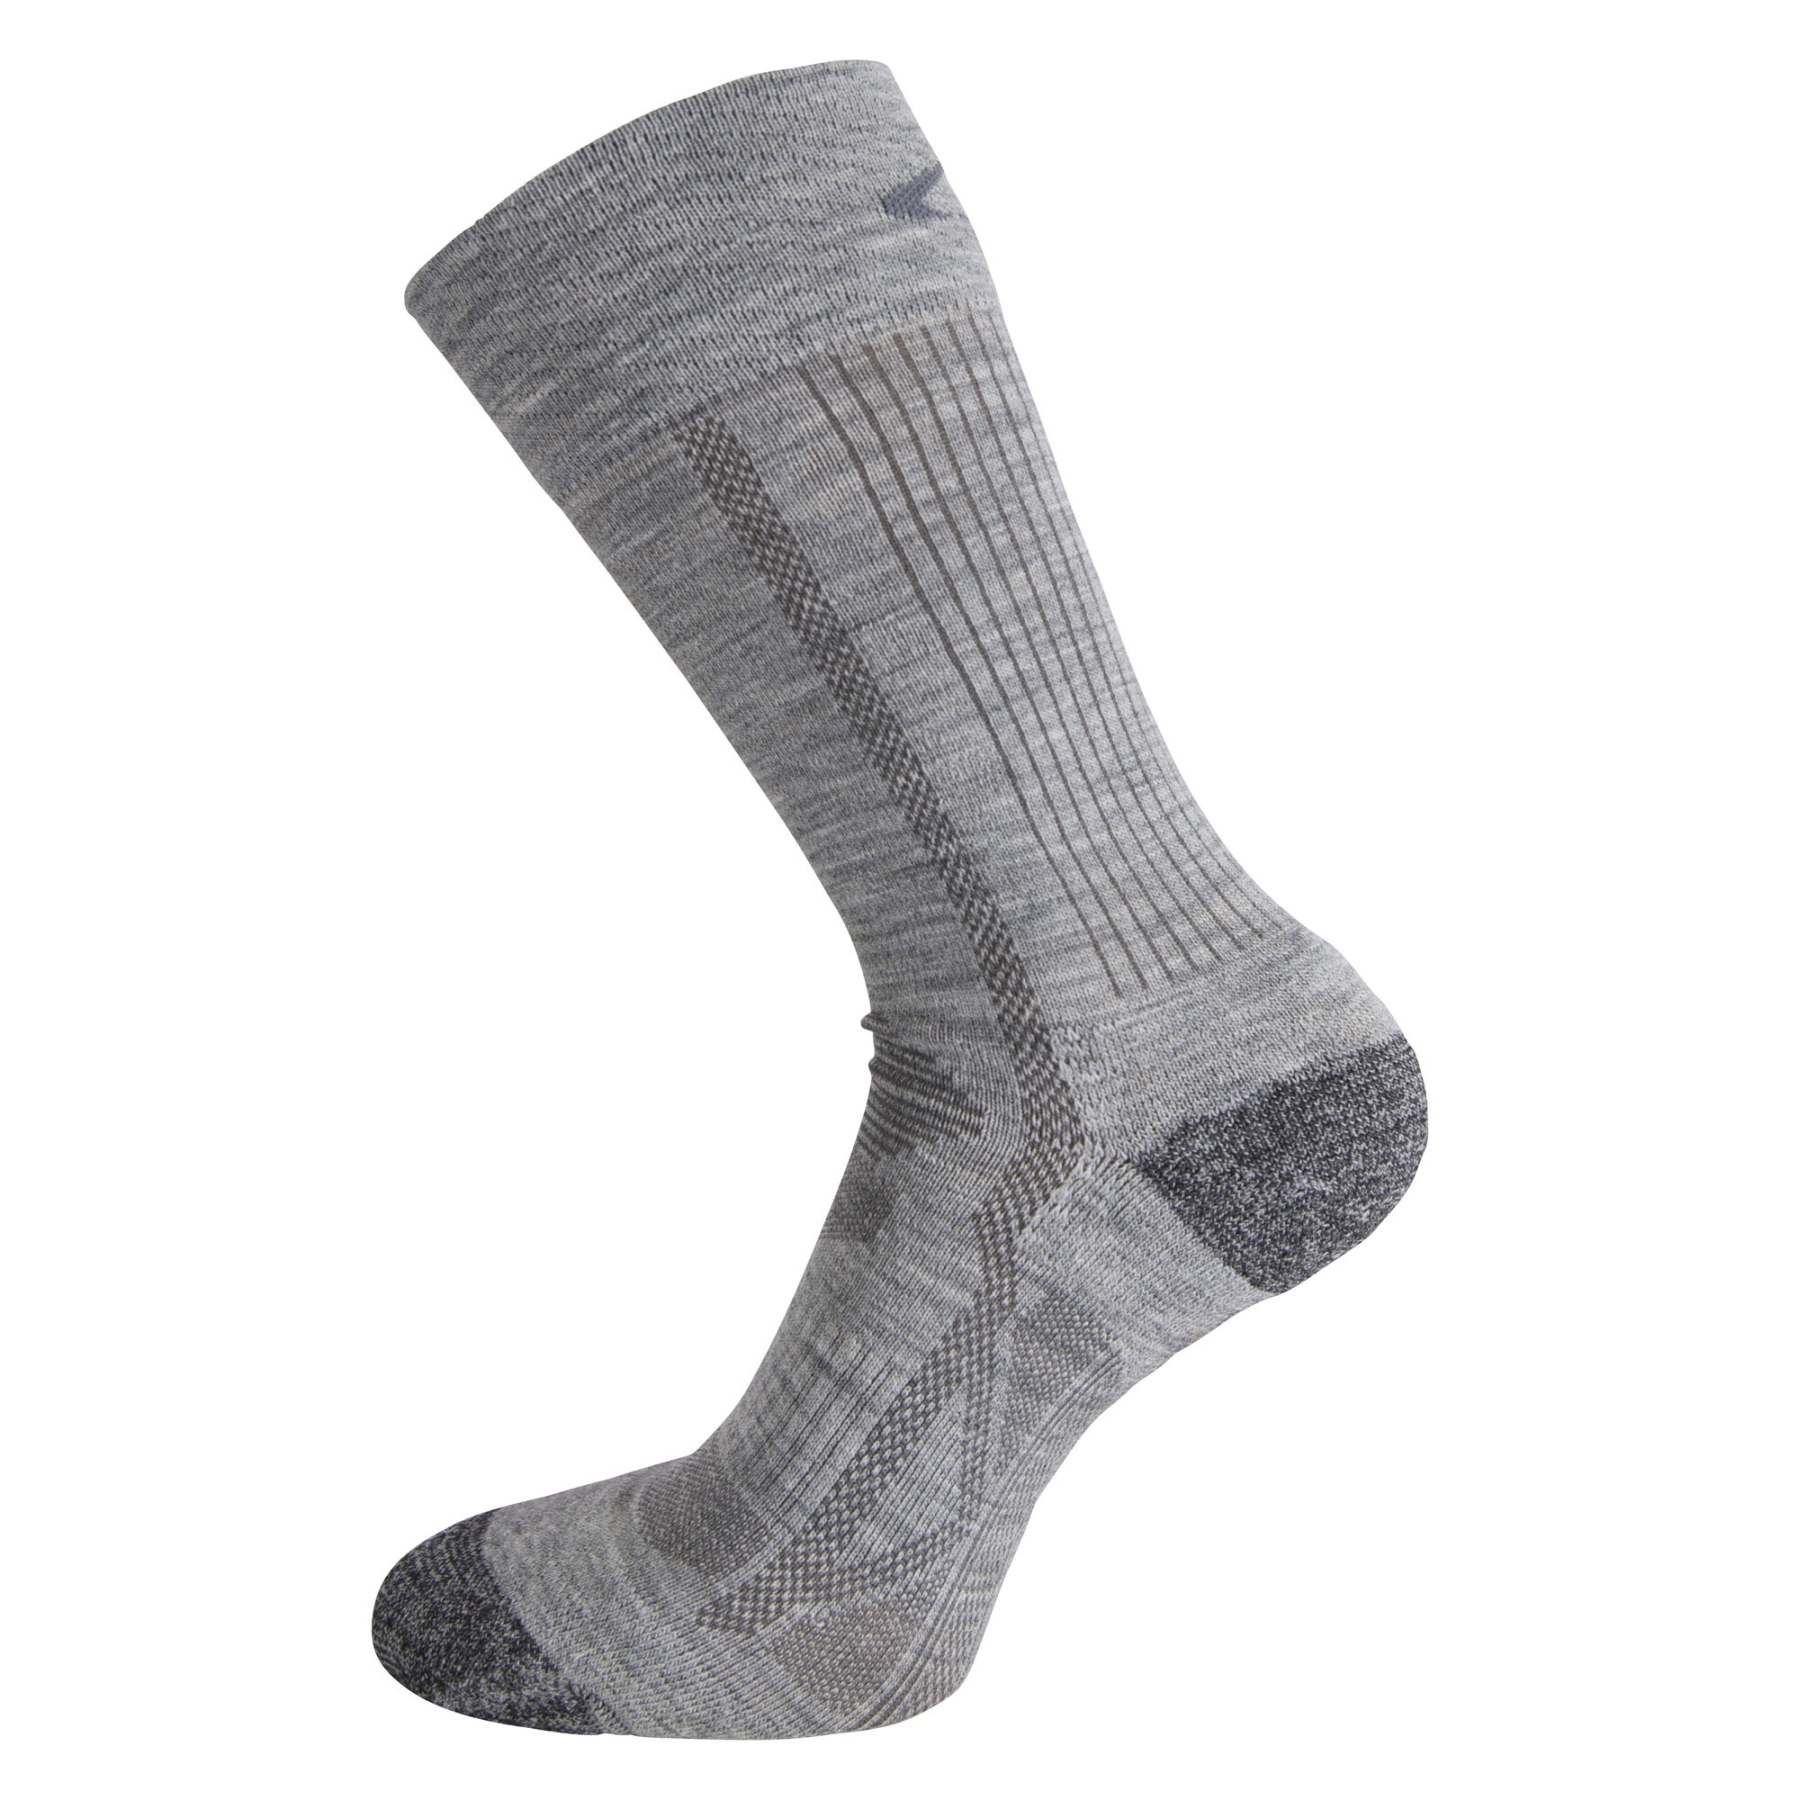 Picture of Ulvang Outdoor Socks 2 Pack - Black/Charcoal Melange